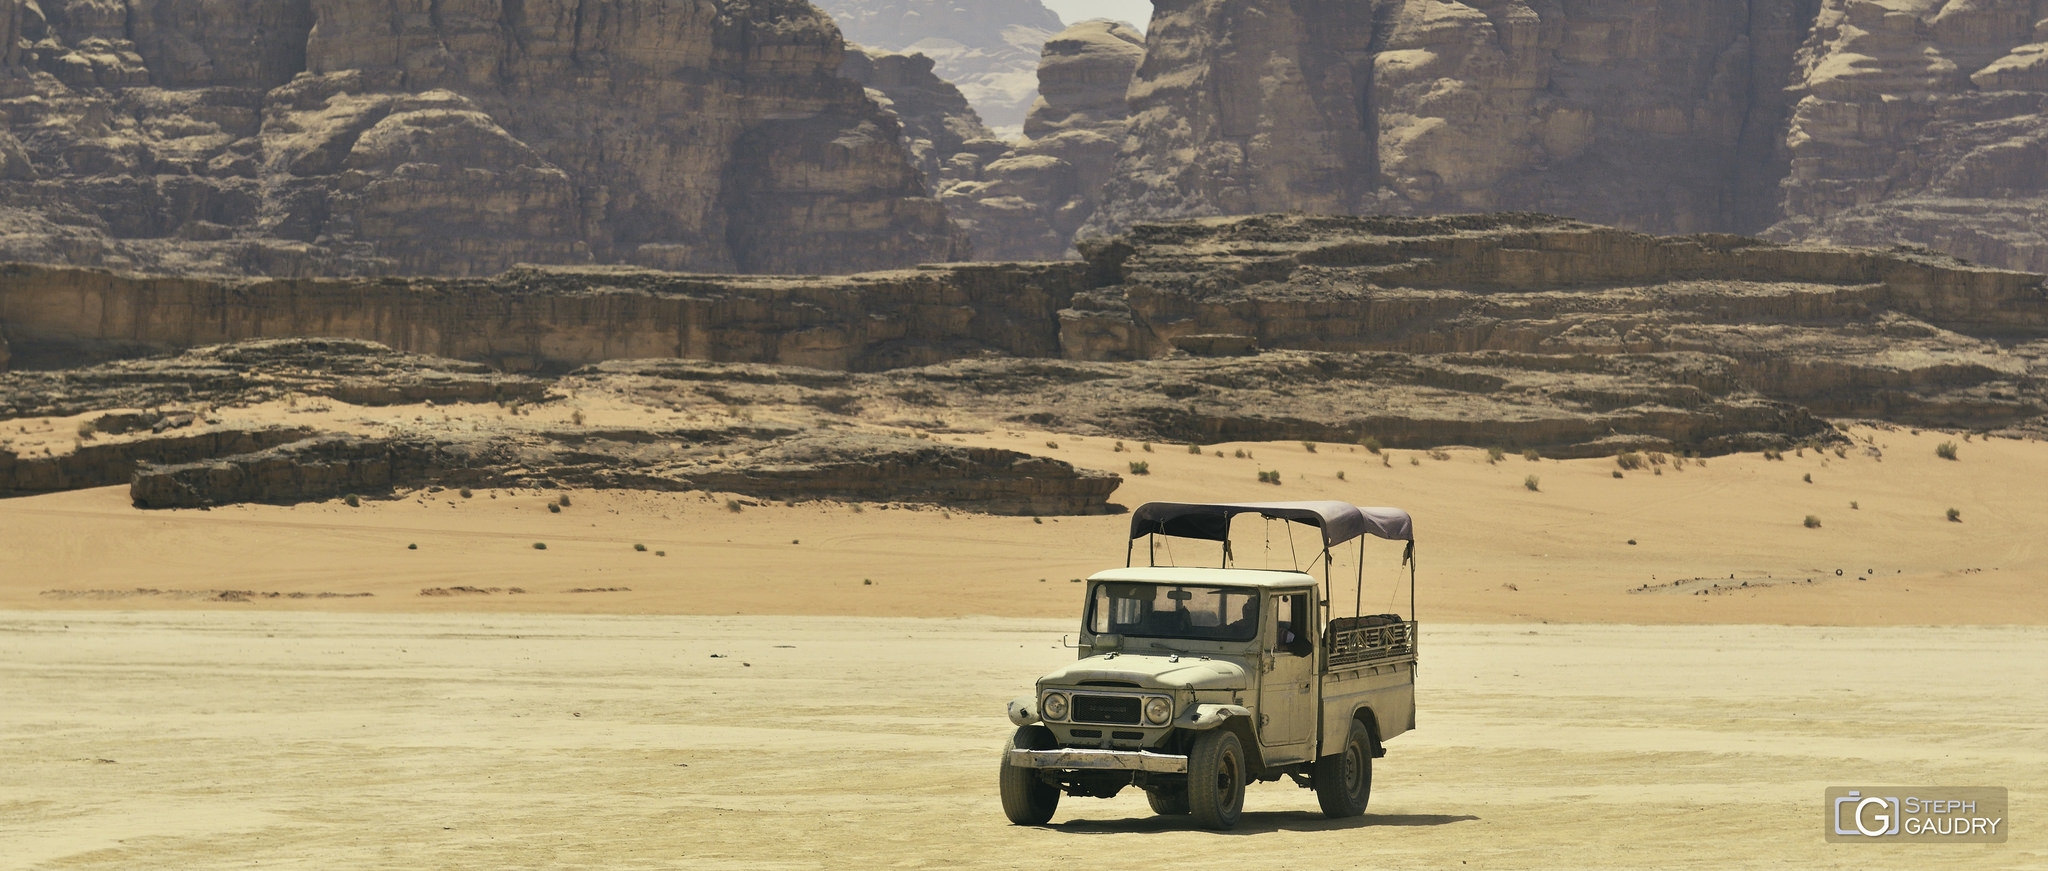 Wadi Rum 4x4 [Cliquez pour lancer le diaporama]